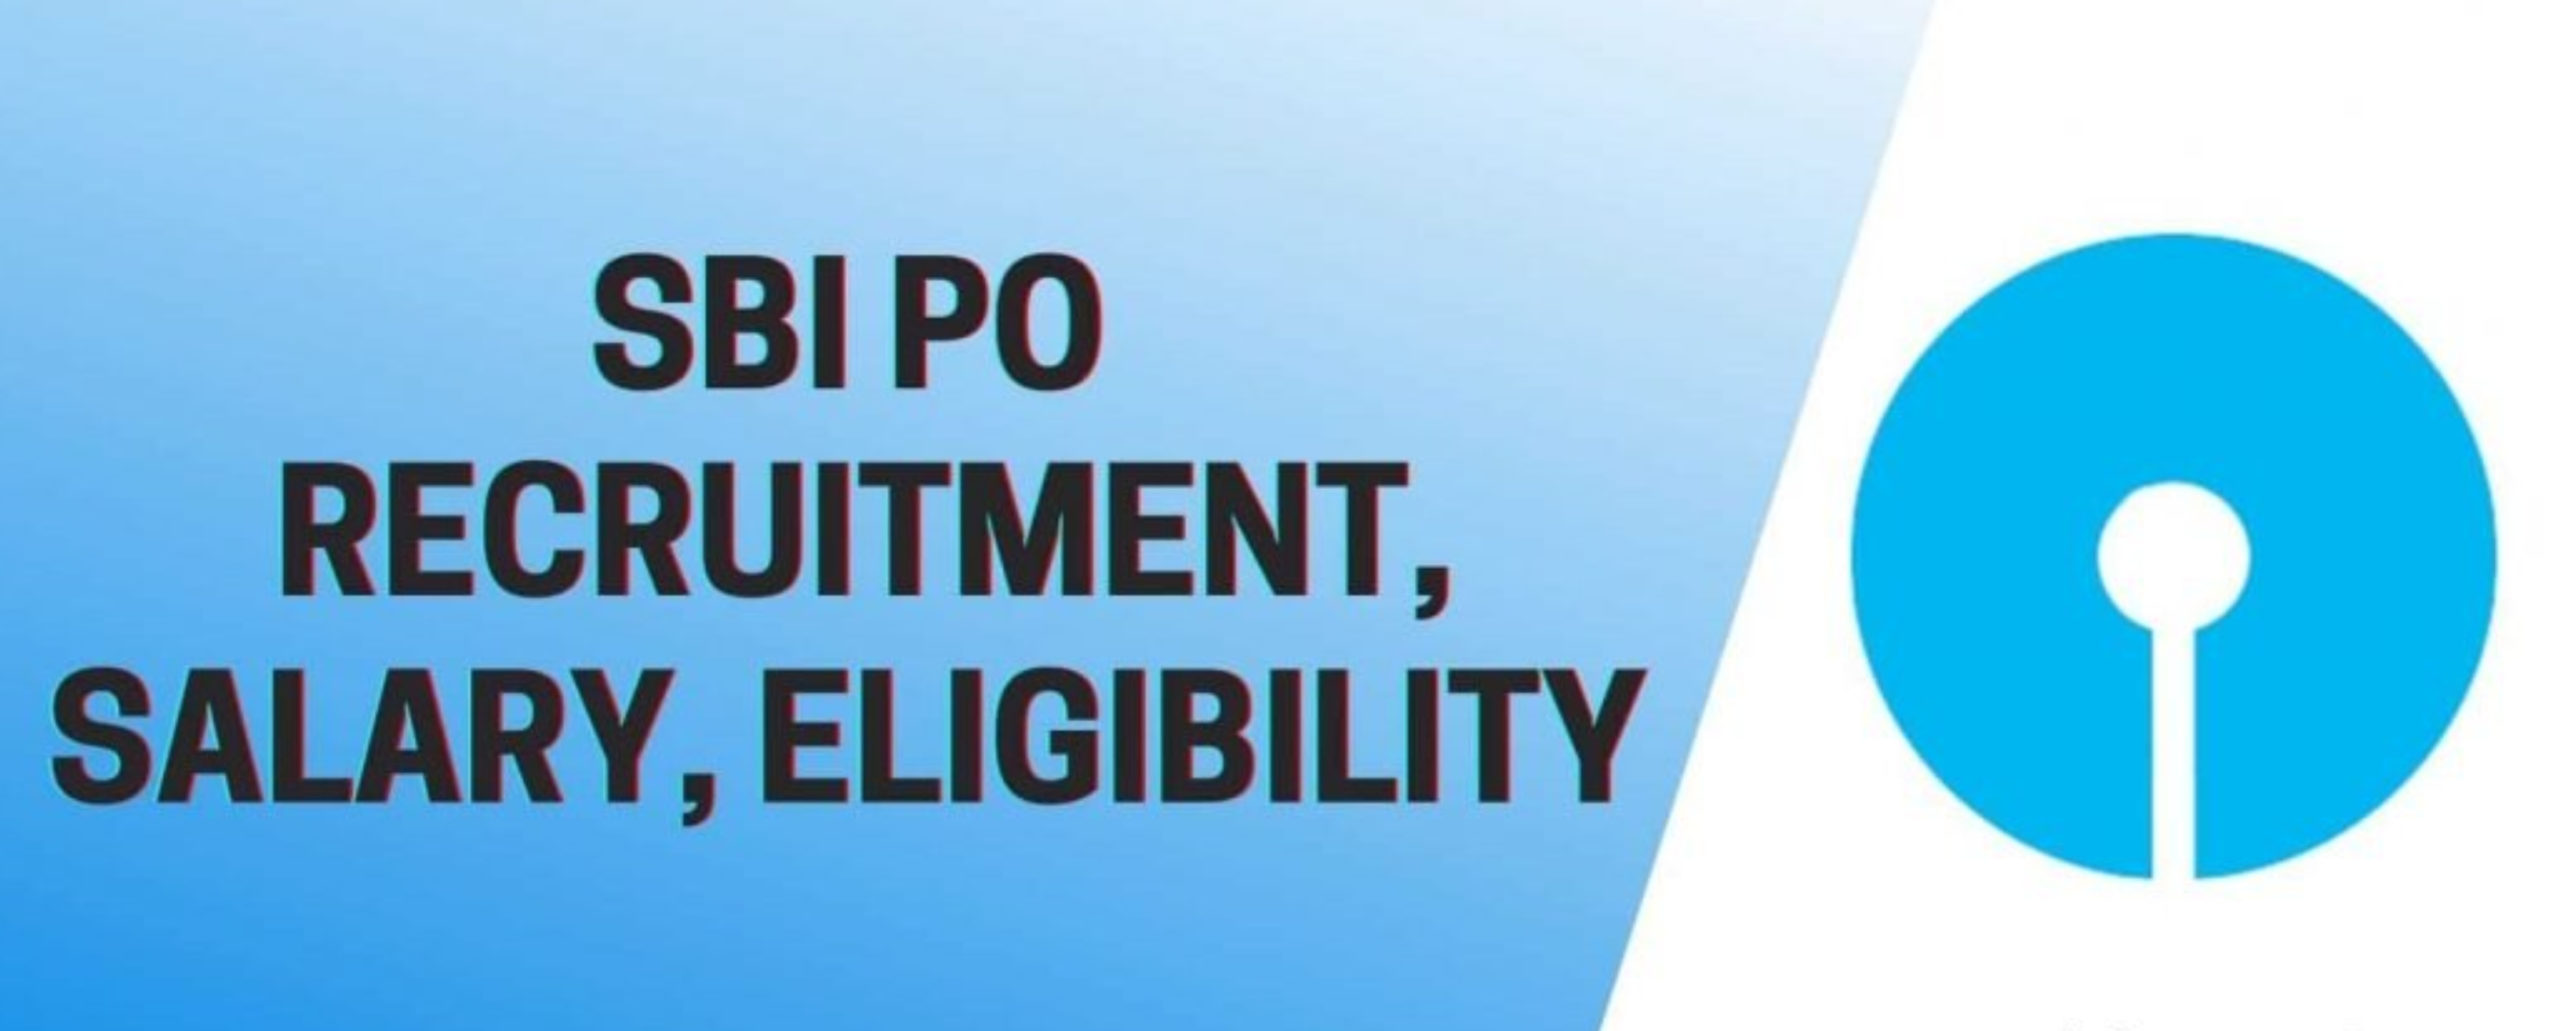 SBI PO 2021: Notification, Exam Date, Syllabus, Vacancy, Eligibility Criteria